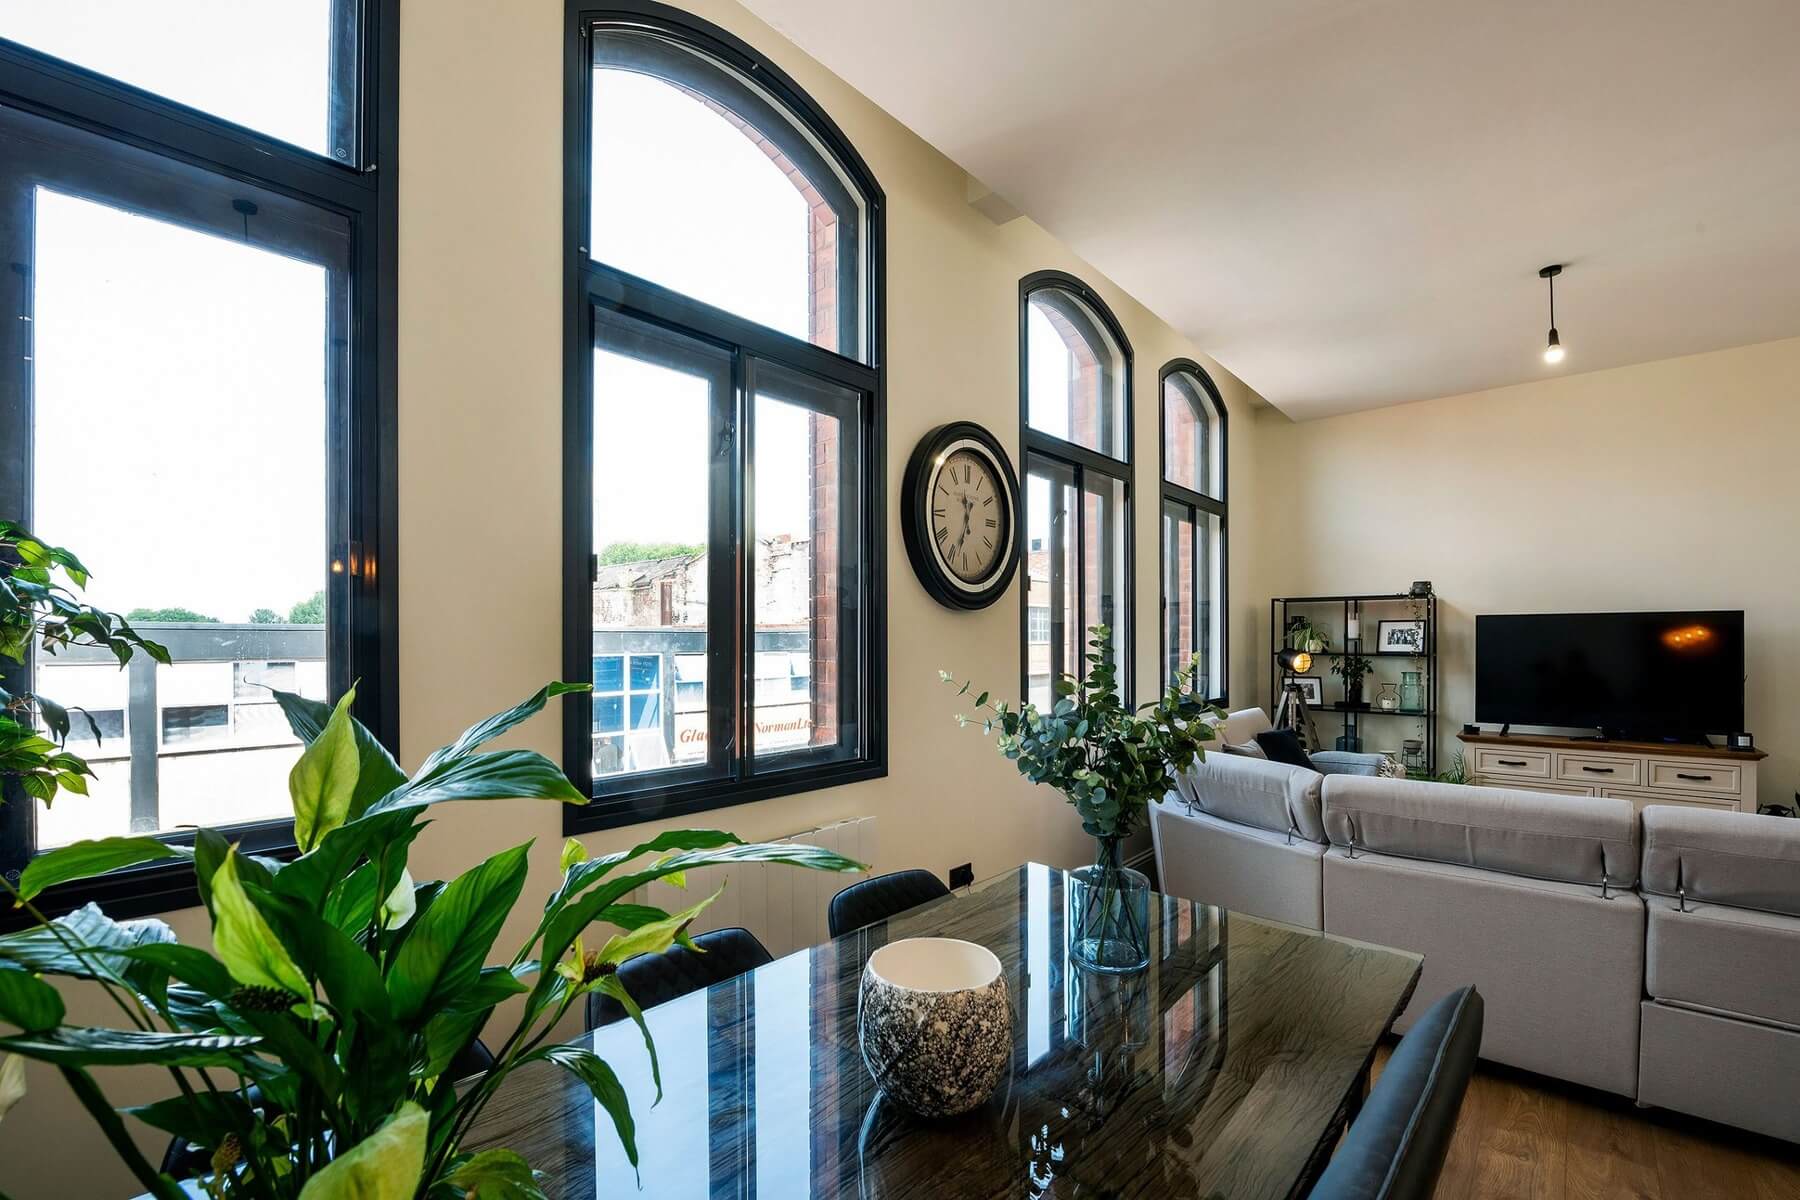 Modern Living Room With Big Windows